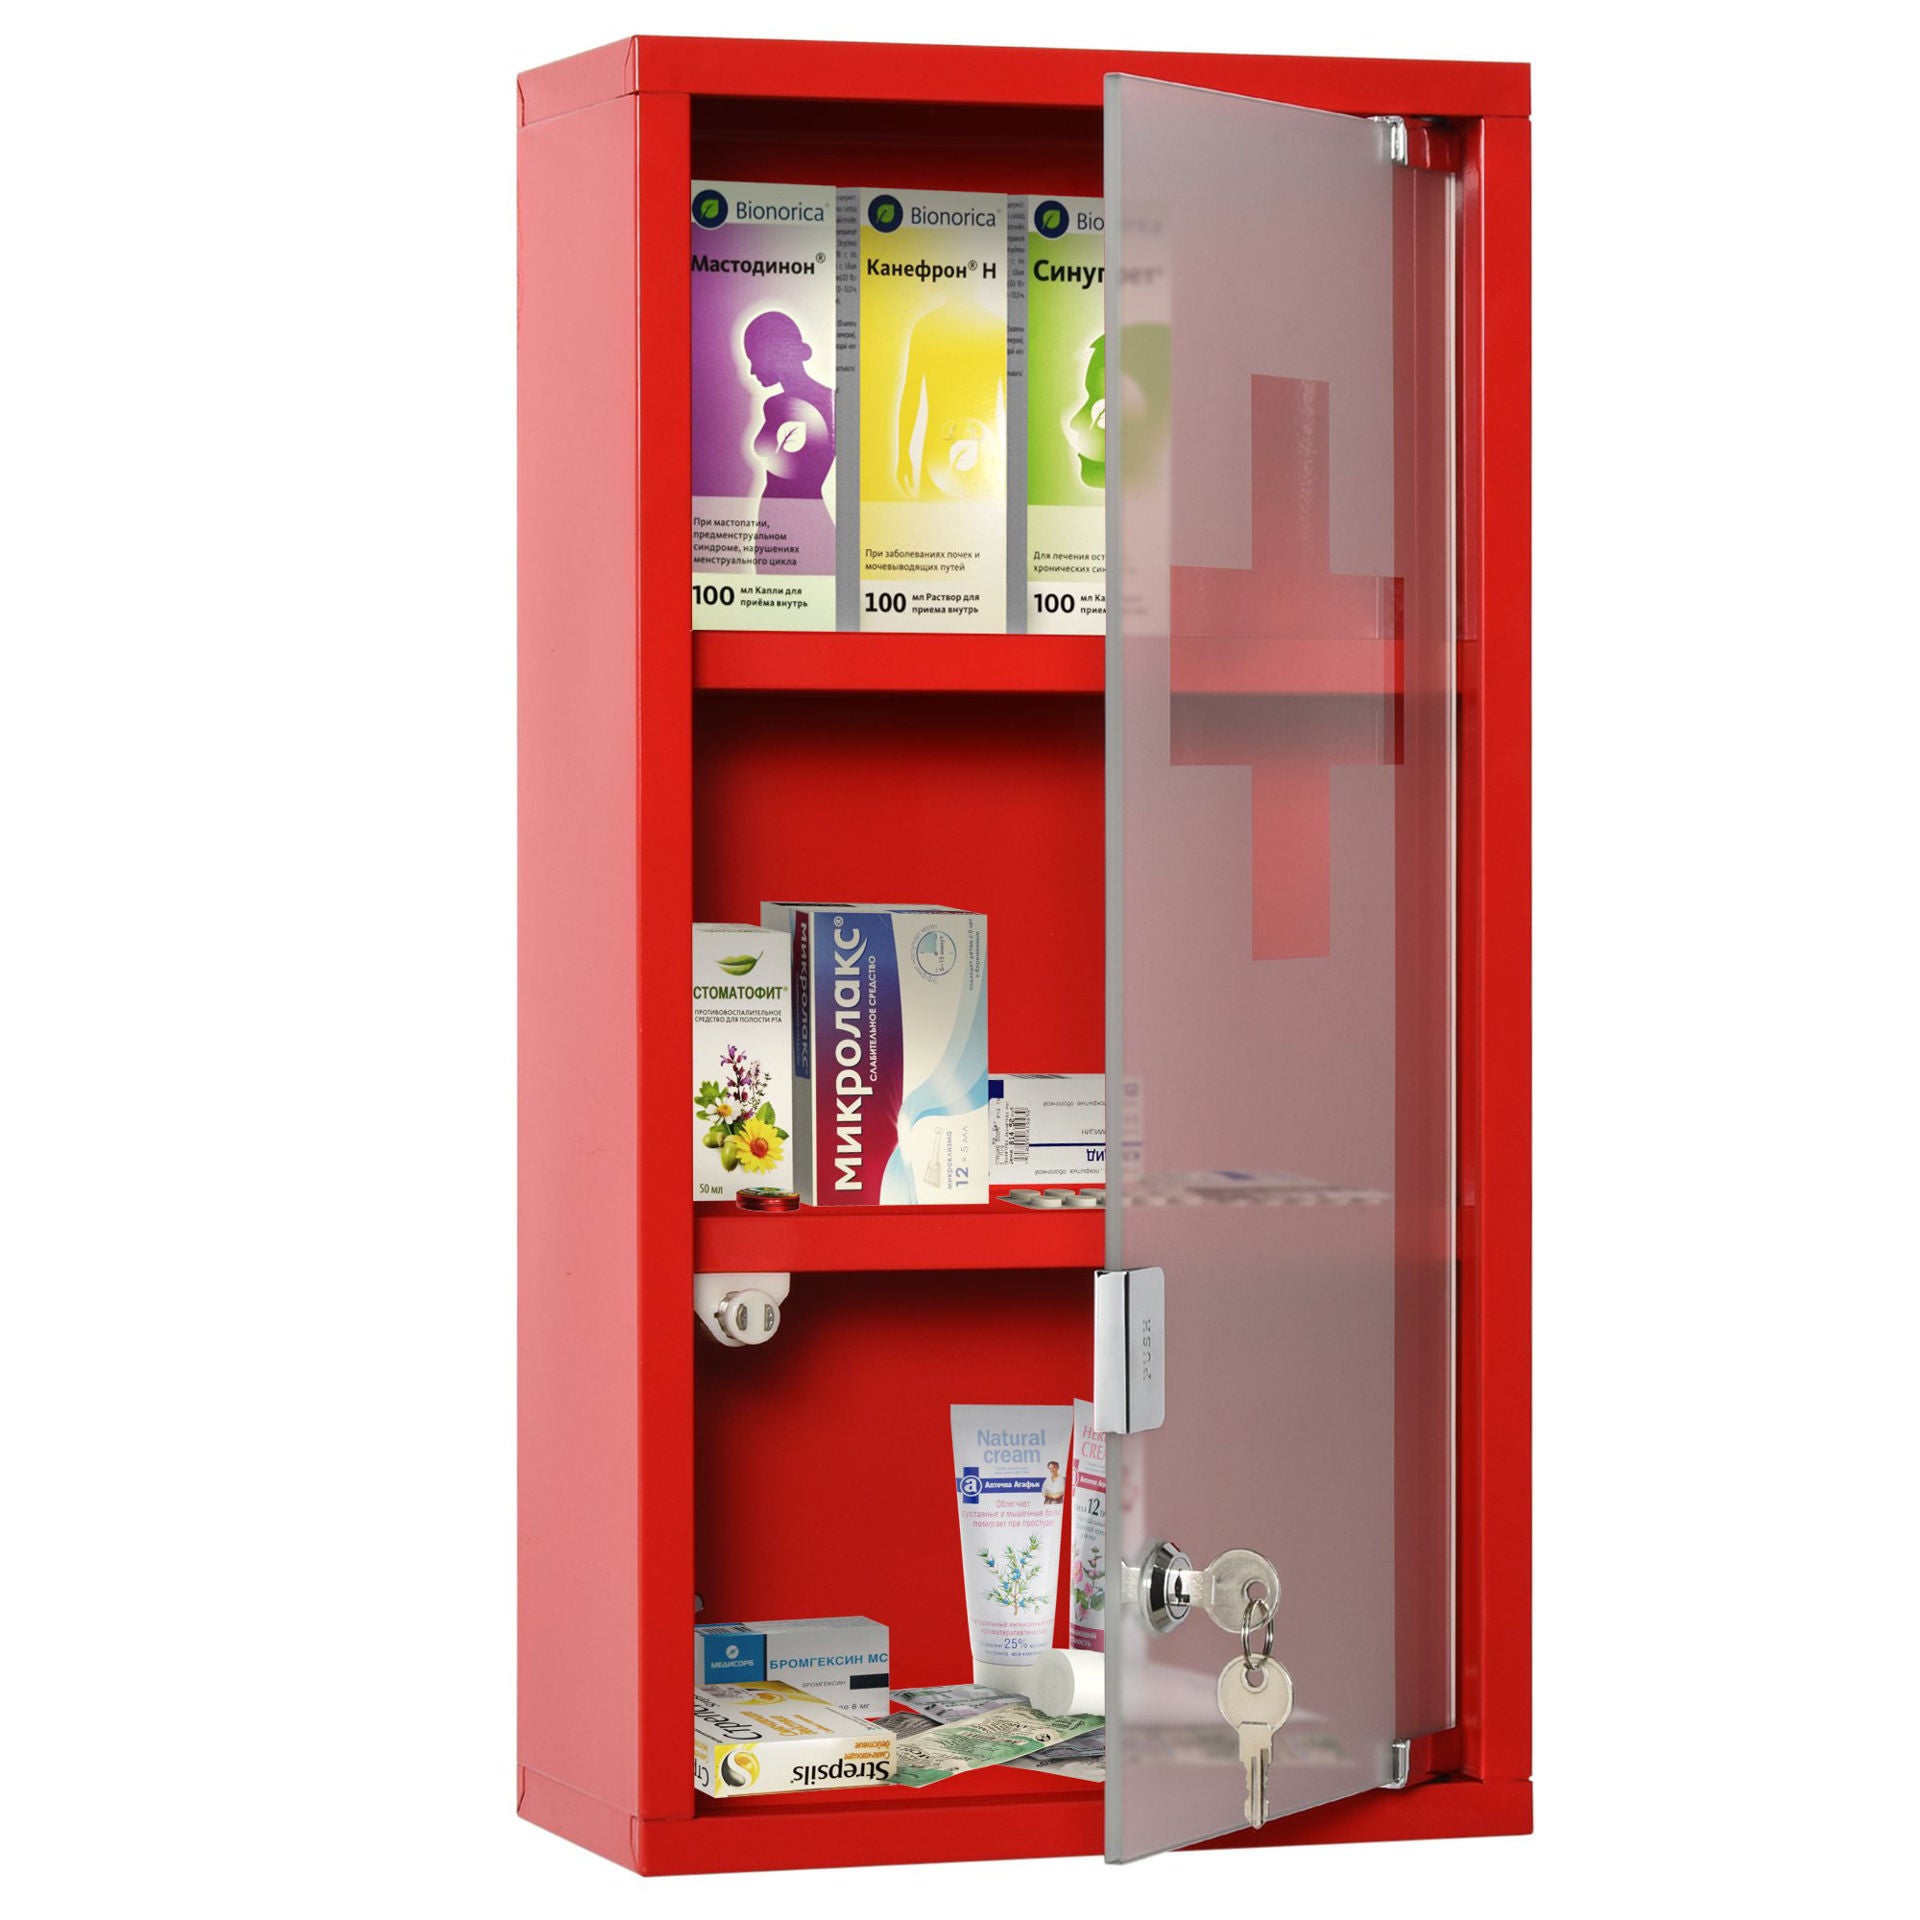 Nancy's Lark Cay Medicine Cabinet - Red - Steel, Glass - 9.84 cm x 4.72 cm x 18.89 cm